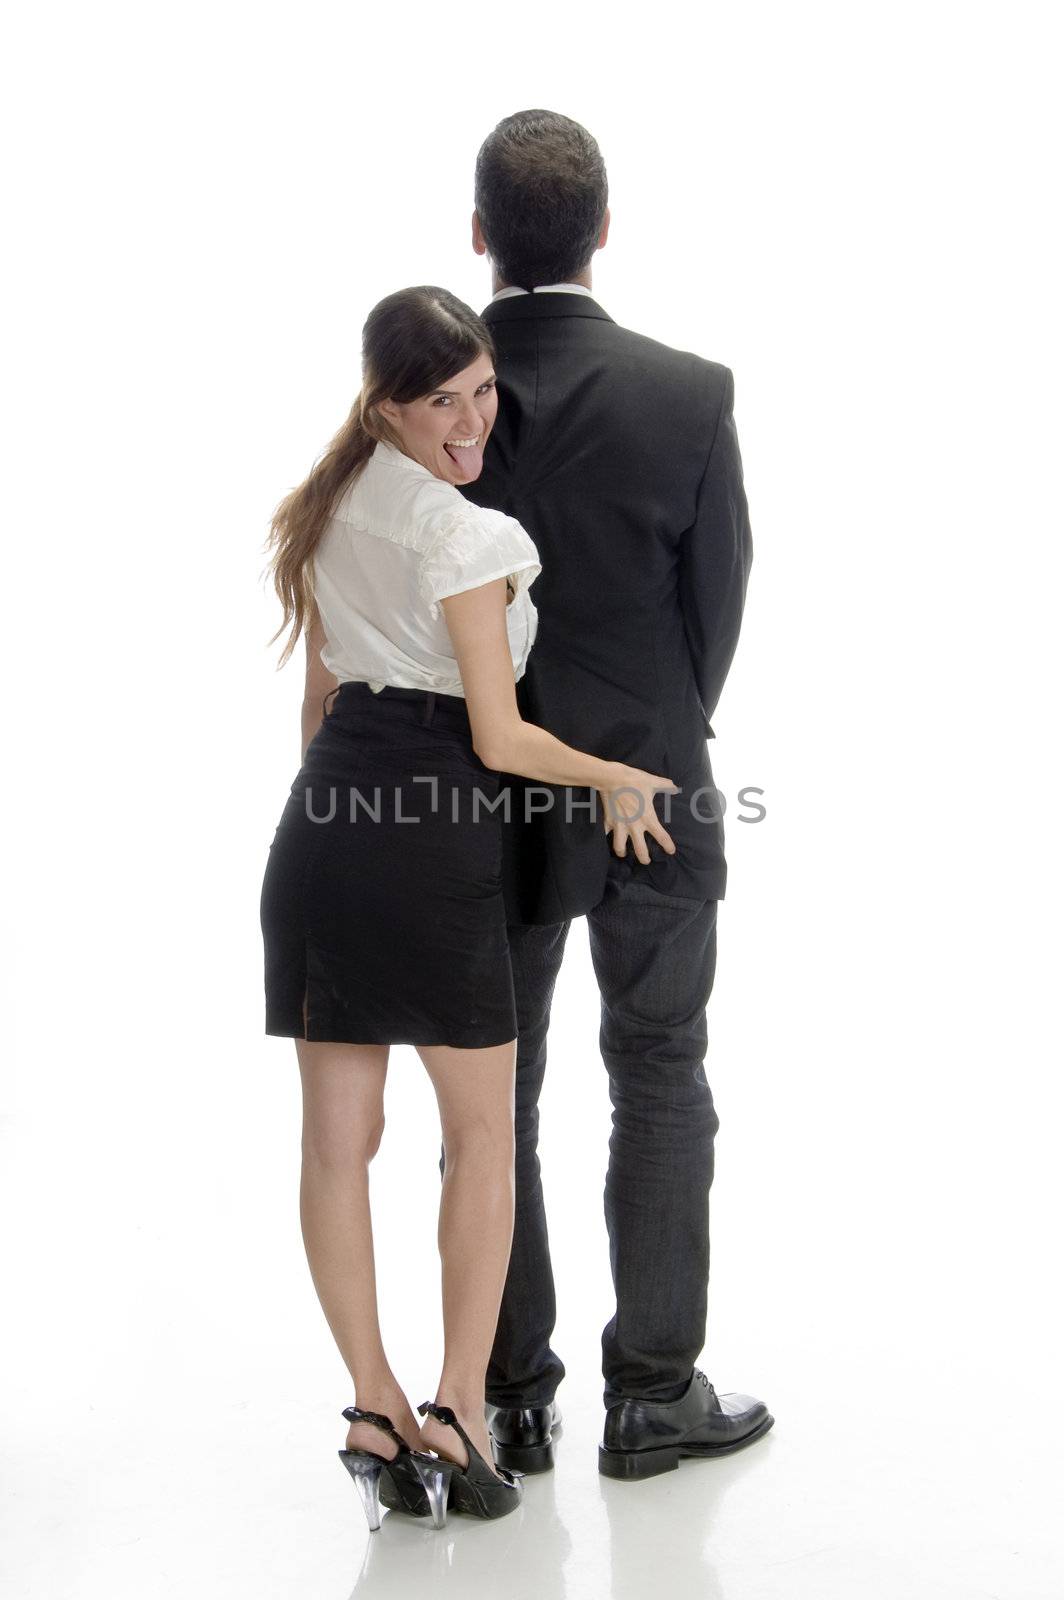 sexy woman pushing man's back by imagerymajestic